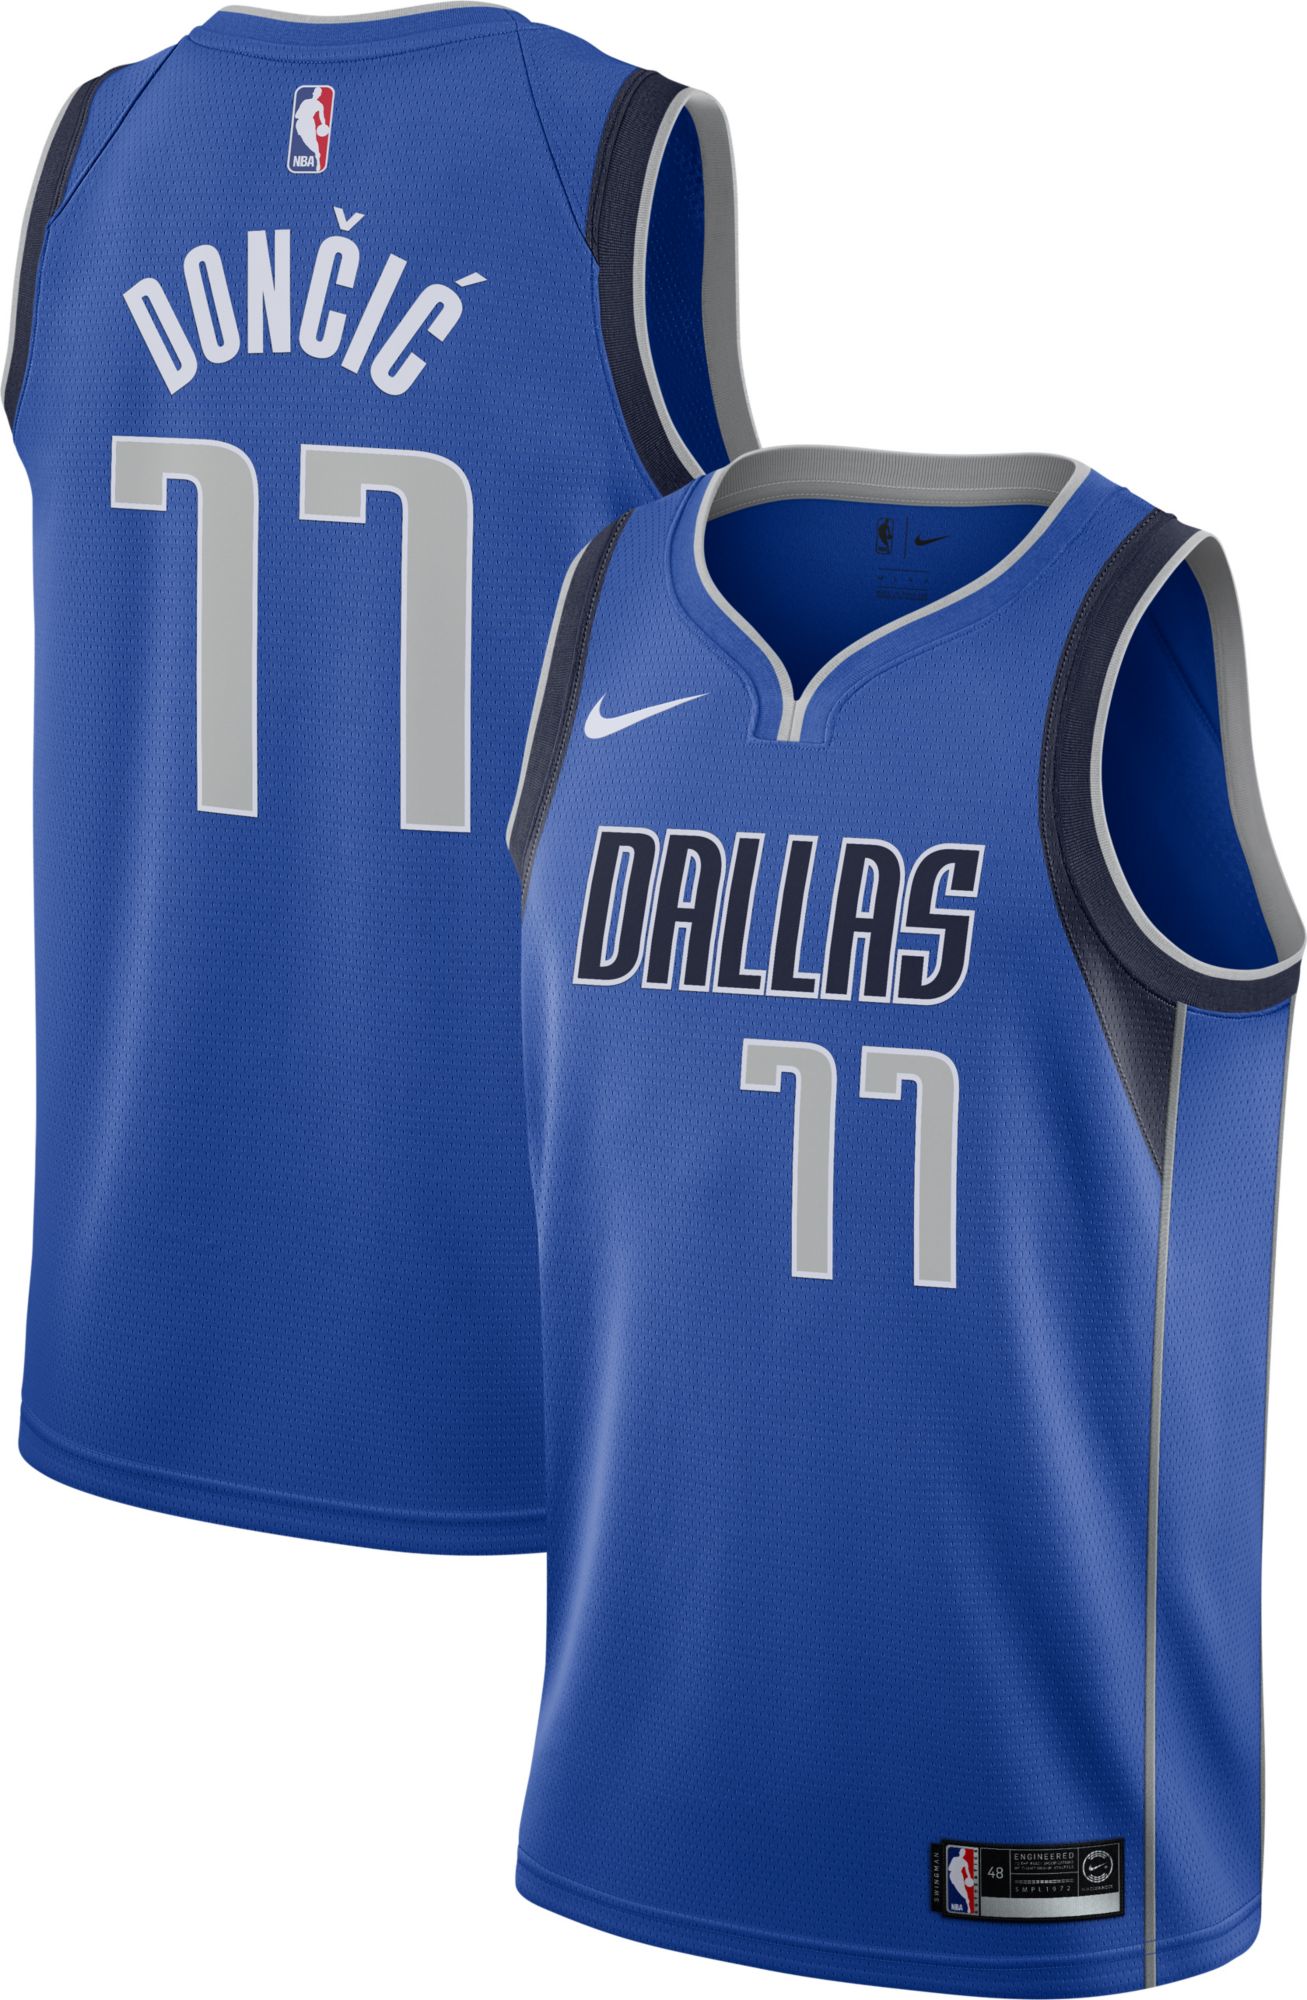 Dallas Mavericks Nike Practice Jersey - Basketball Men's White/Blue New